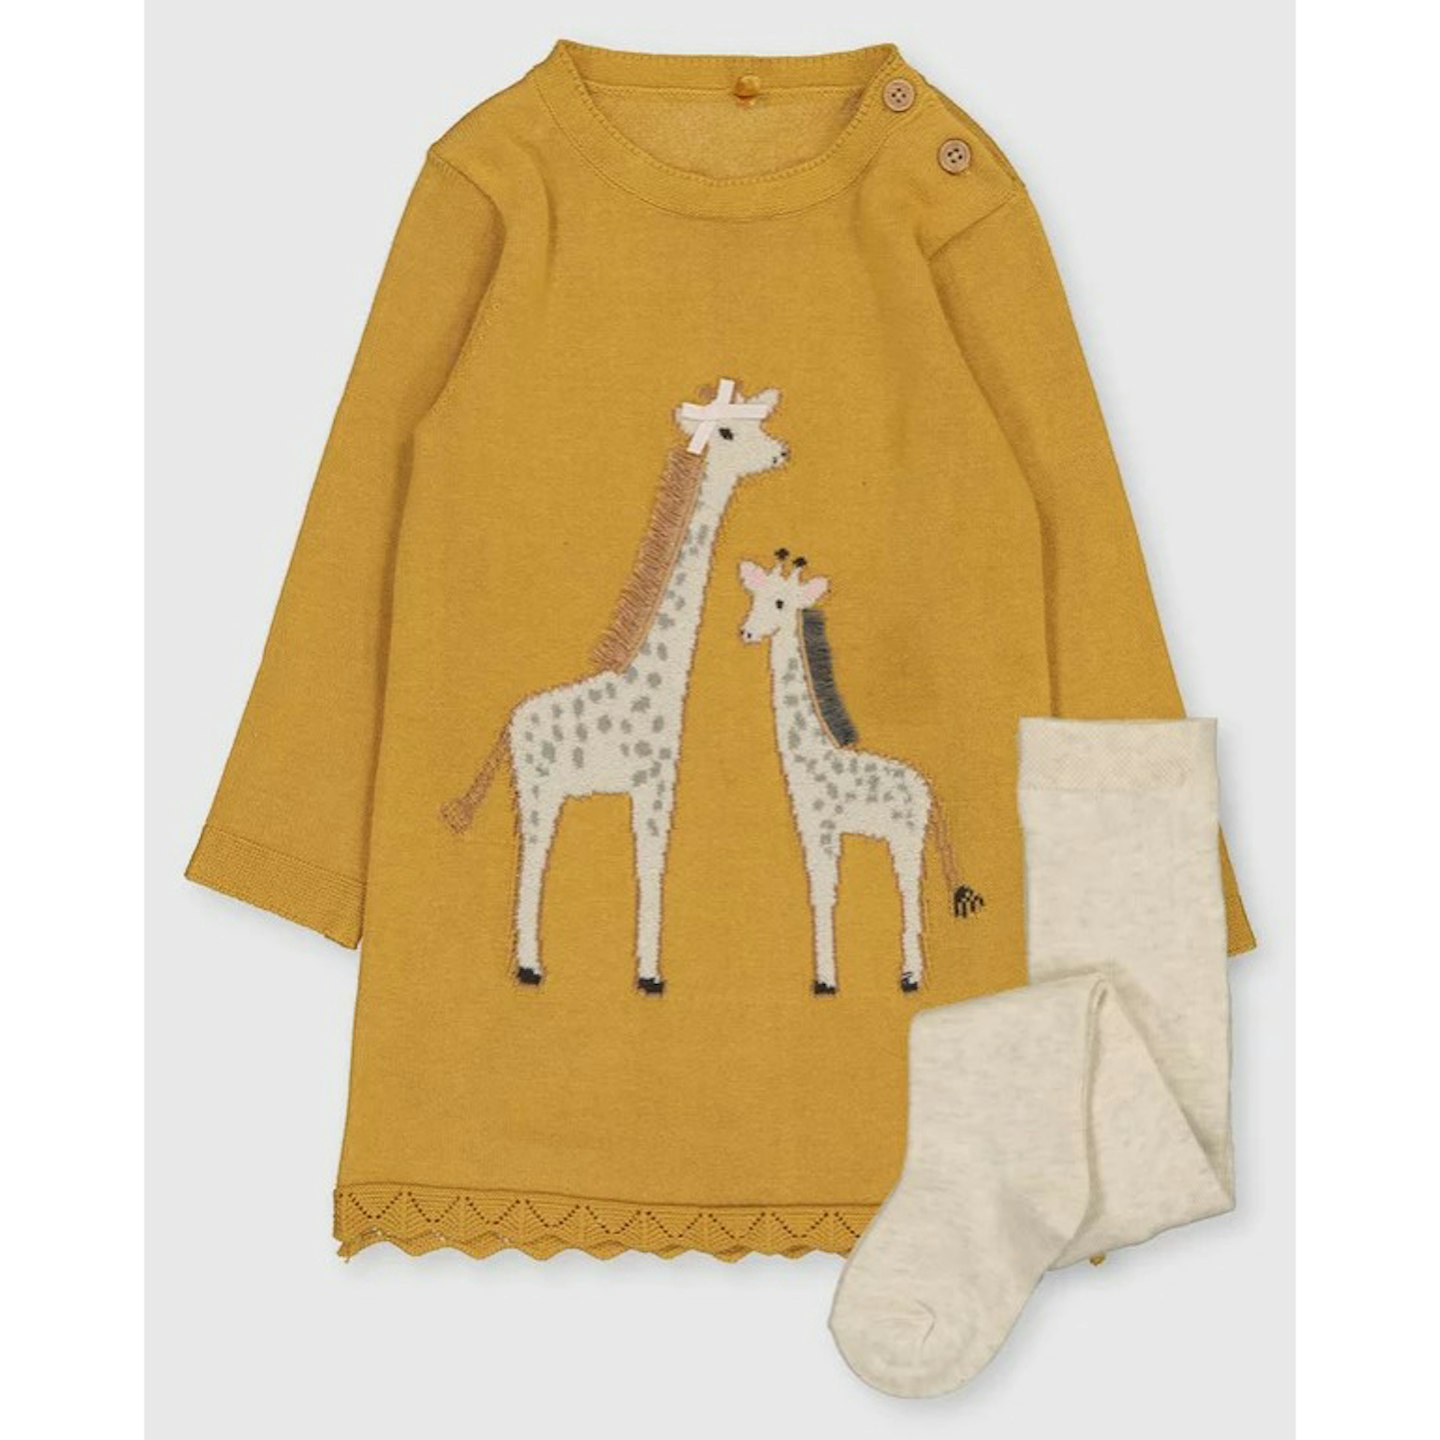 Giraffe Knitted Dress u0026amp; Tights